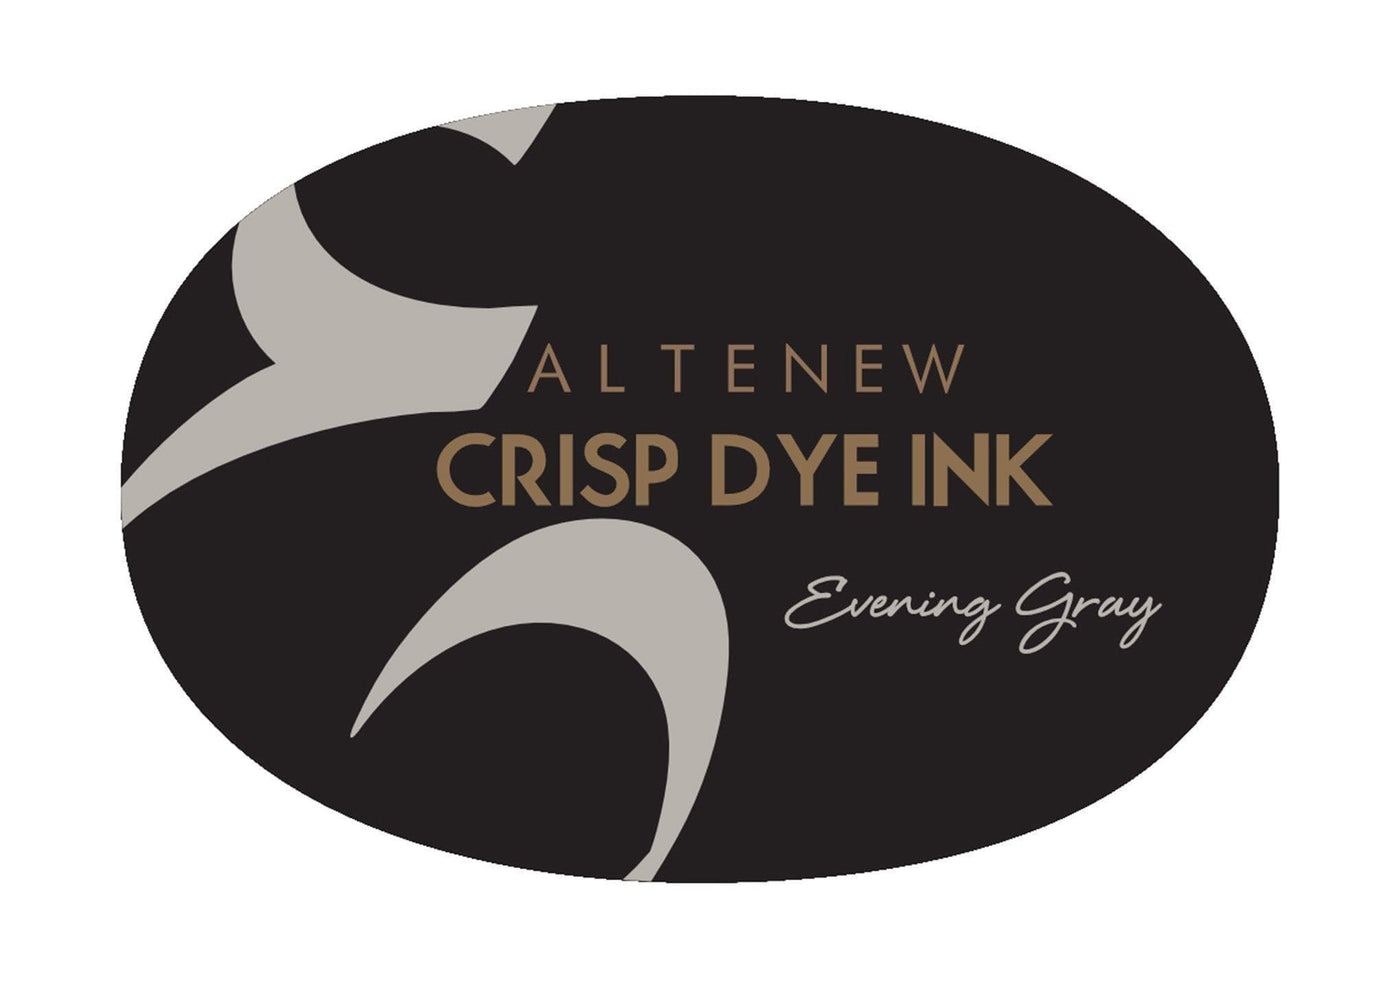 Stewart Superior Inks Evening Gray Crisp Dye Ink